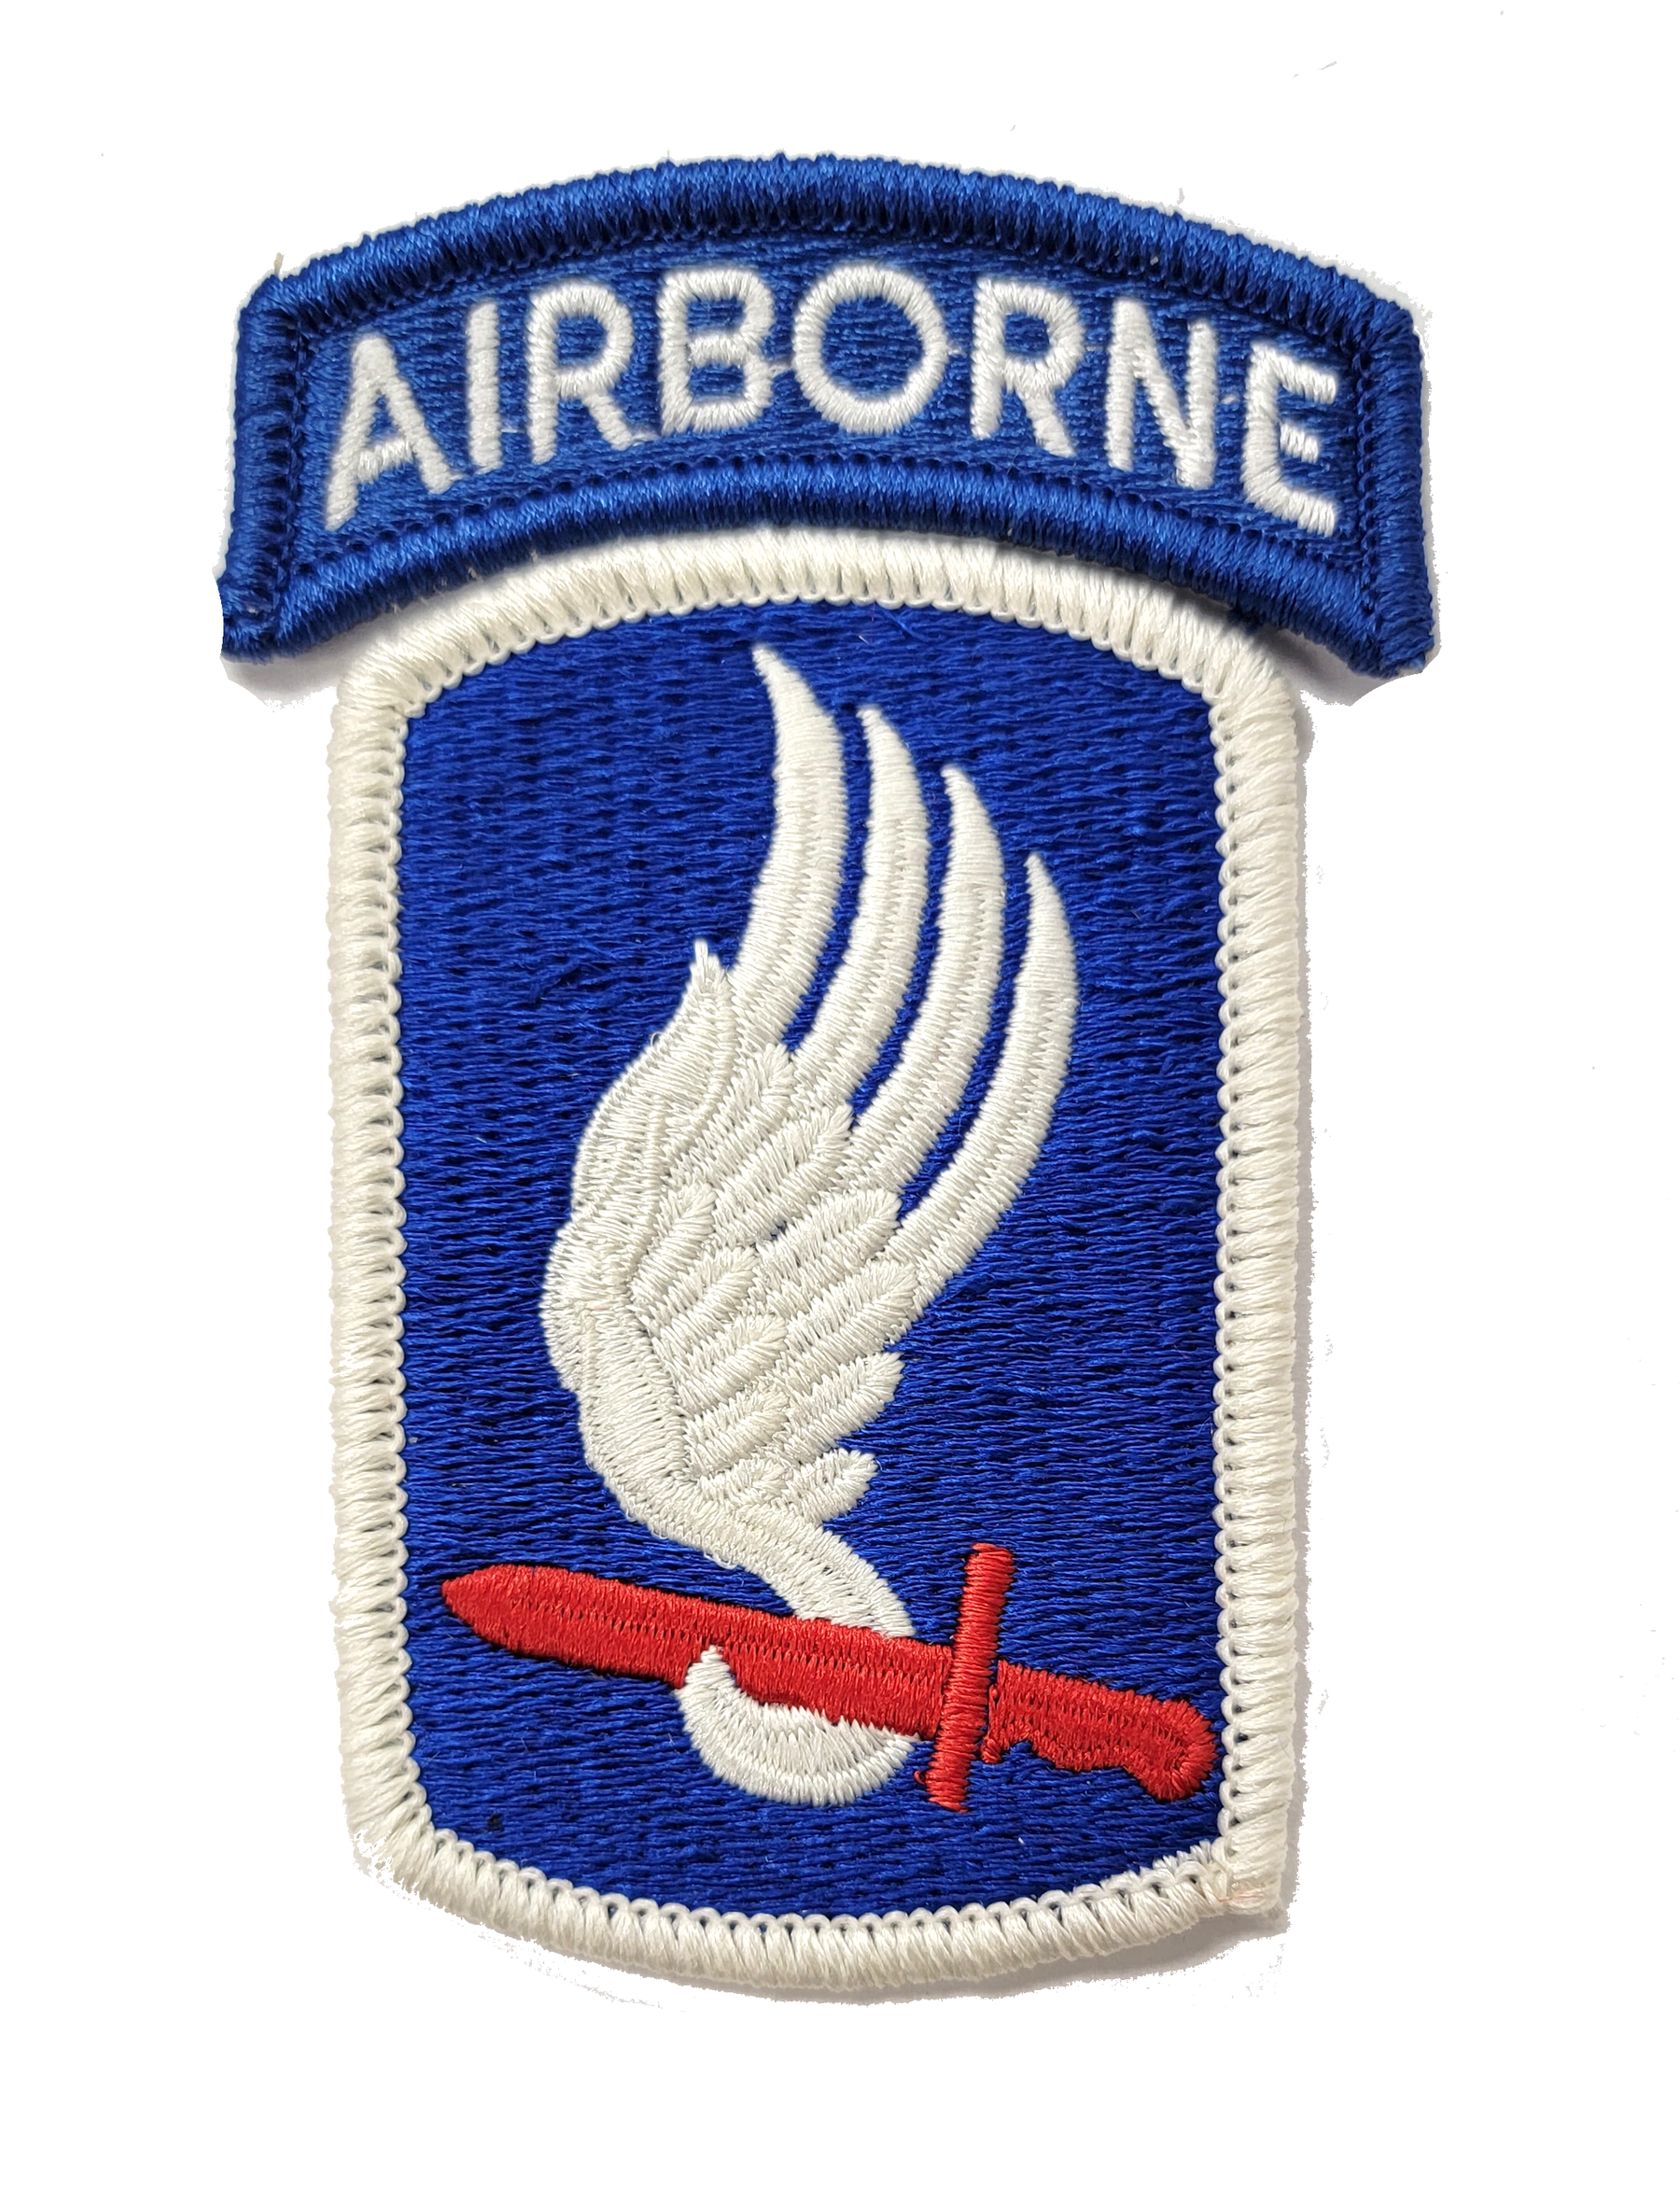 173rd Airborne Brigade Patch - Full Color